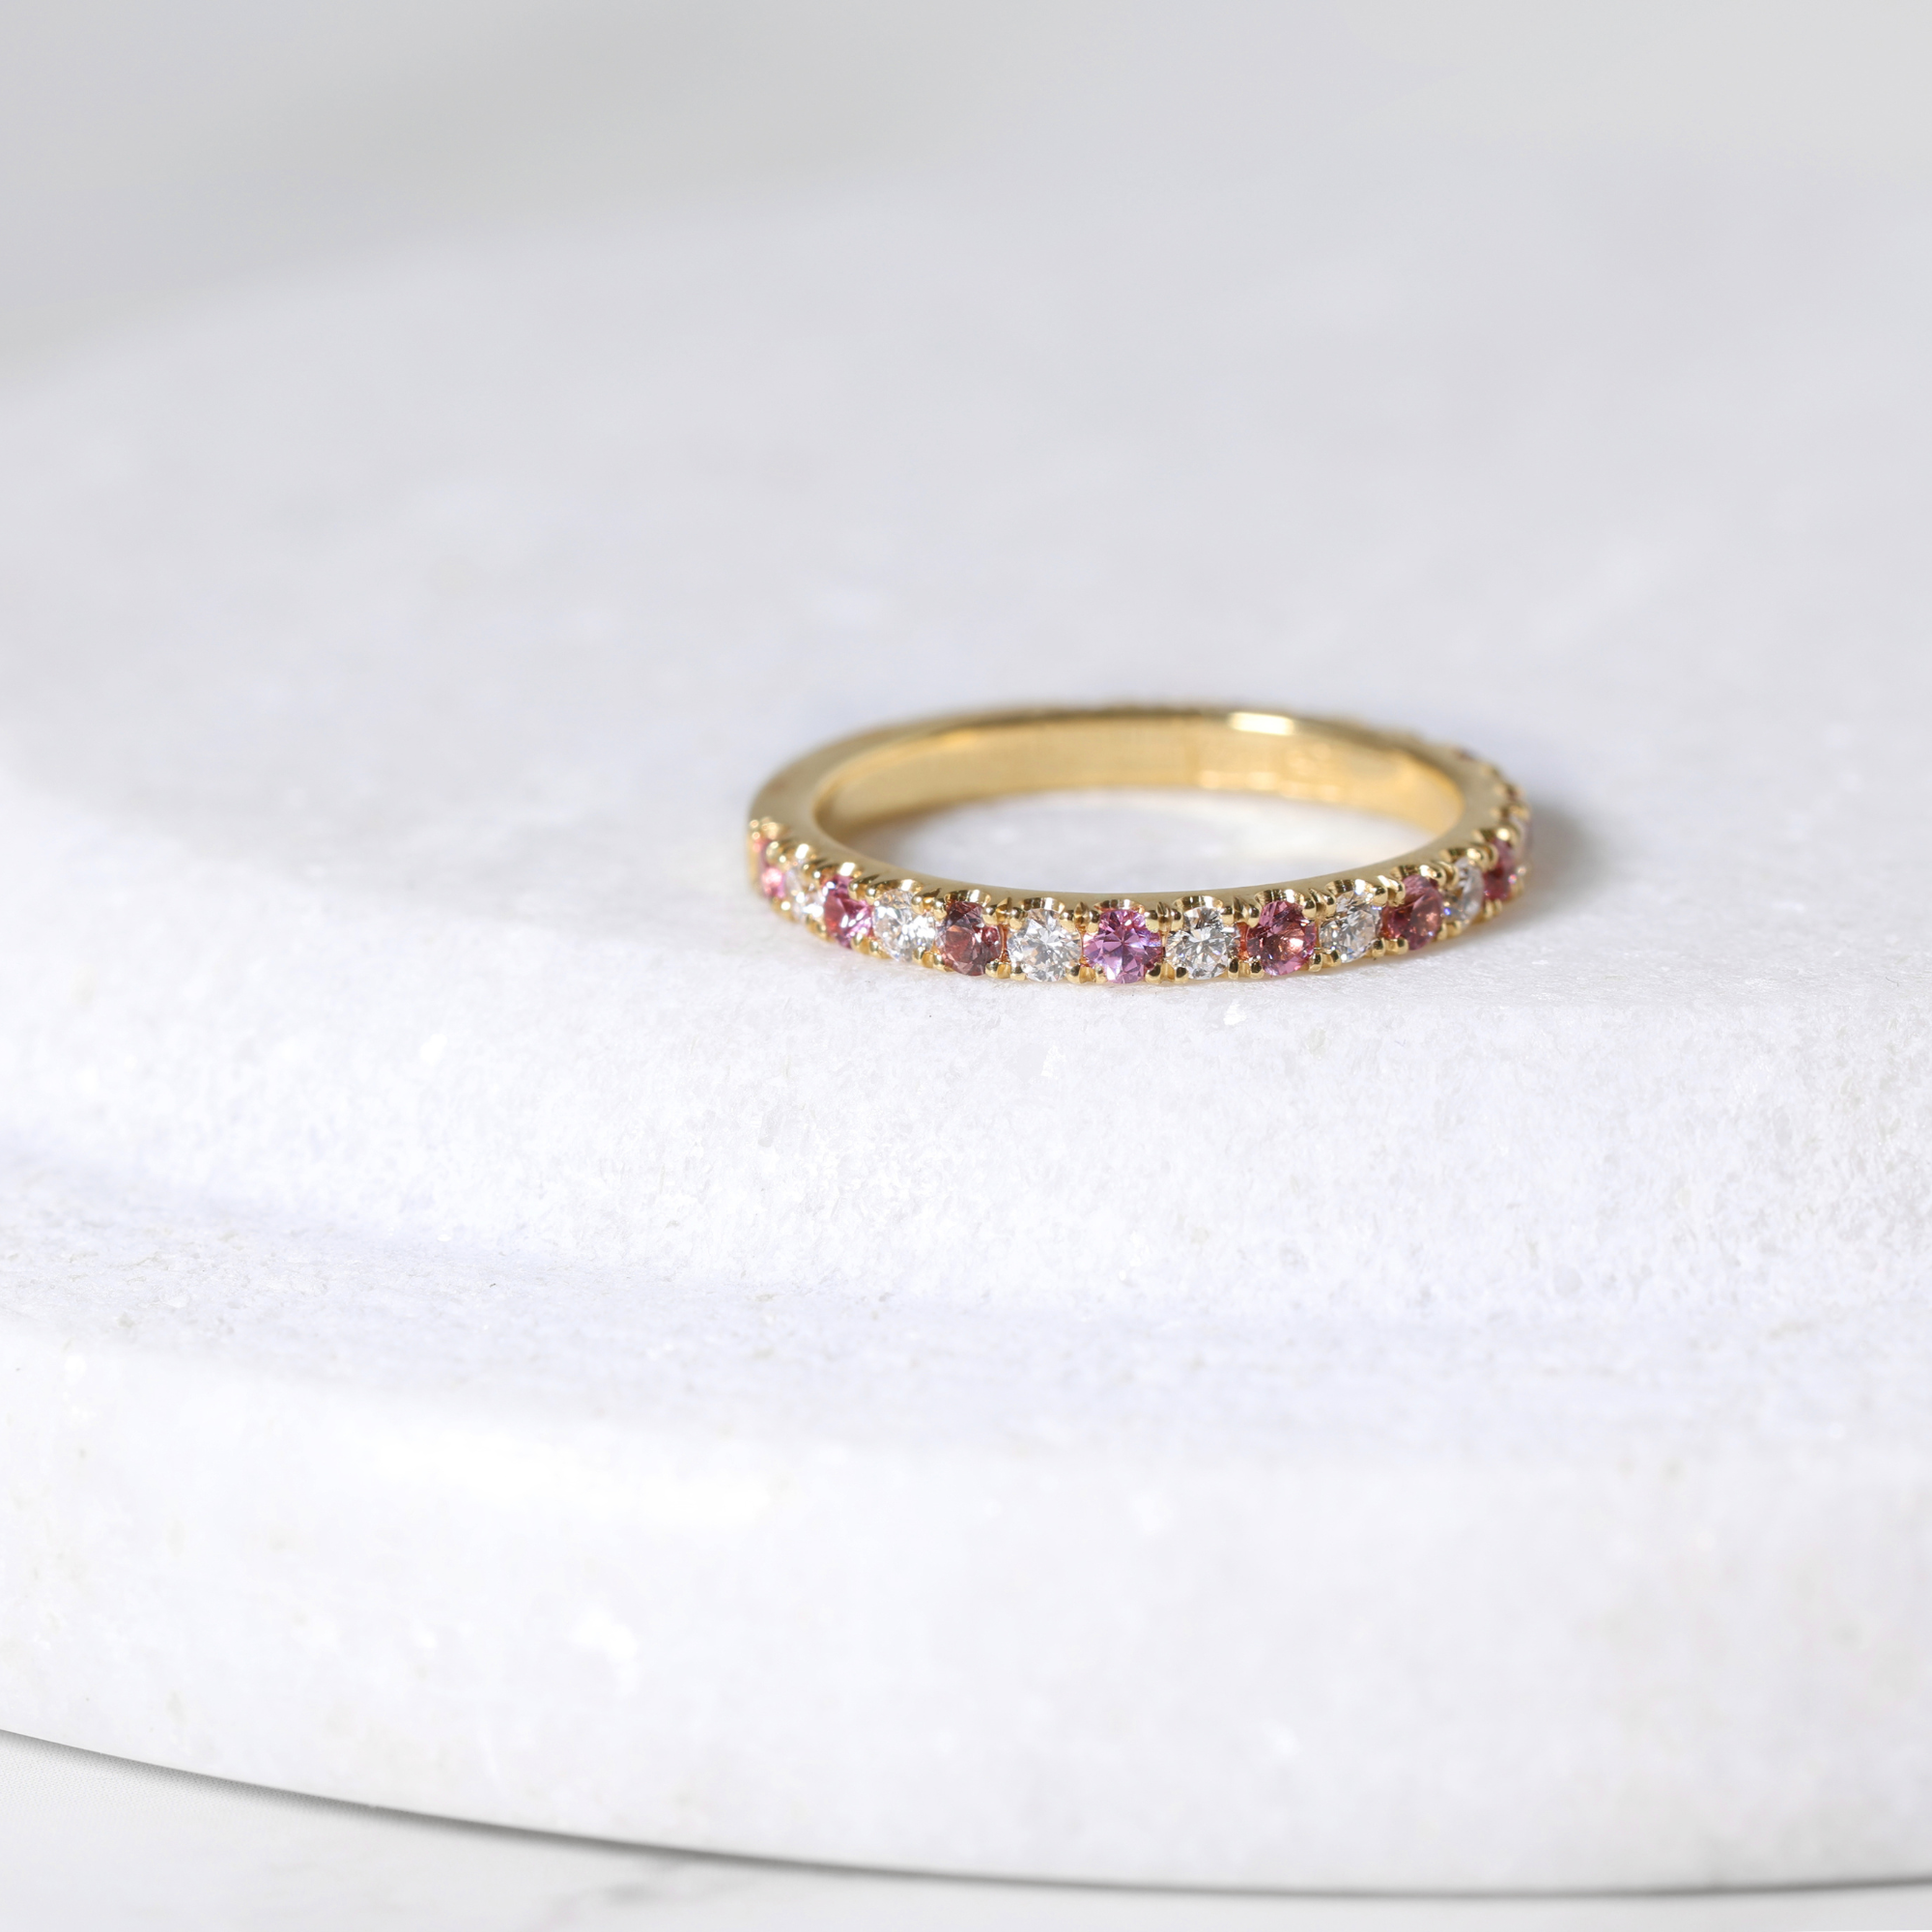 Castle-Set ROUND BRILLIANT CUT Pink Sapphire & Diamond Ring